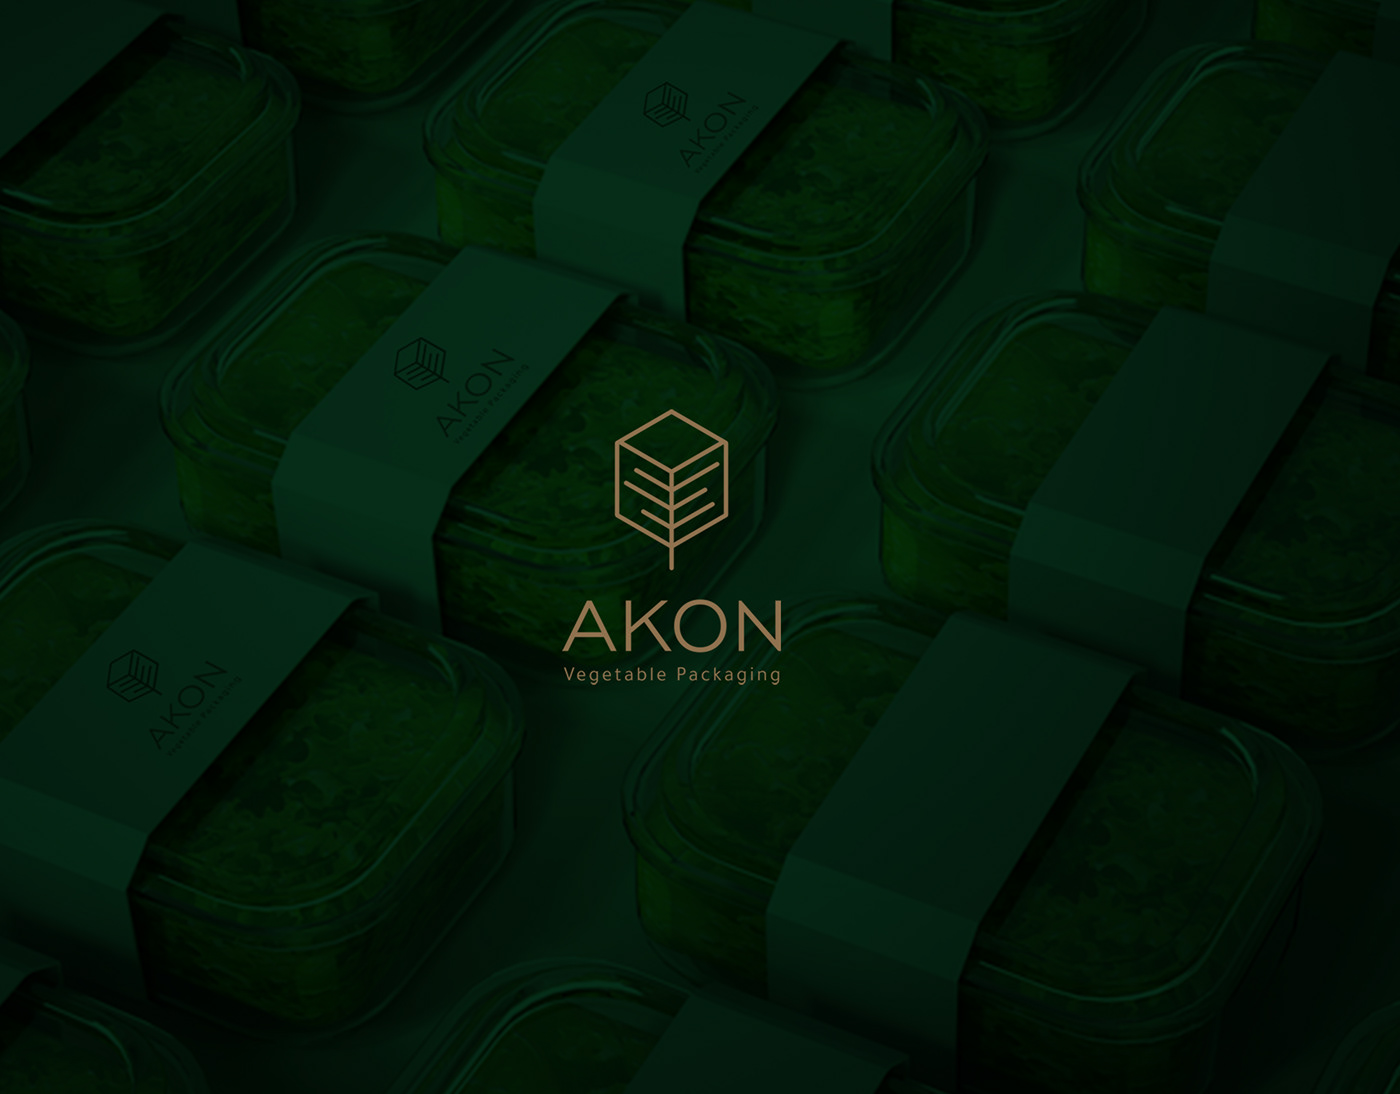 Akon brabd design Esmat logo Packaging professional vegetable